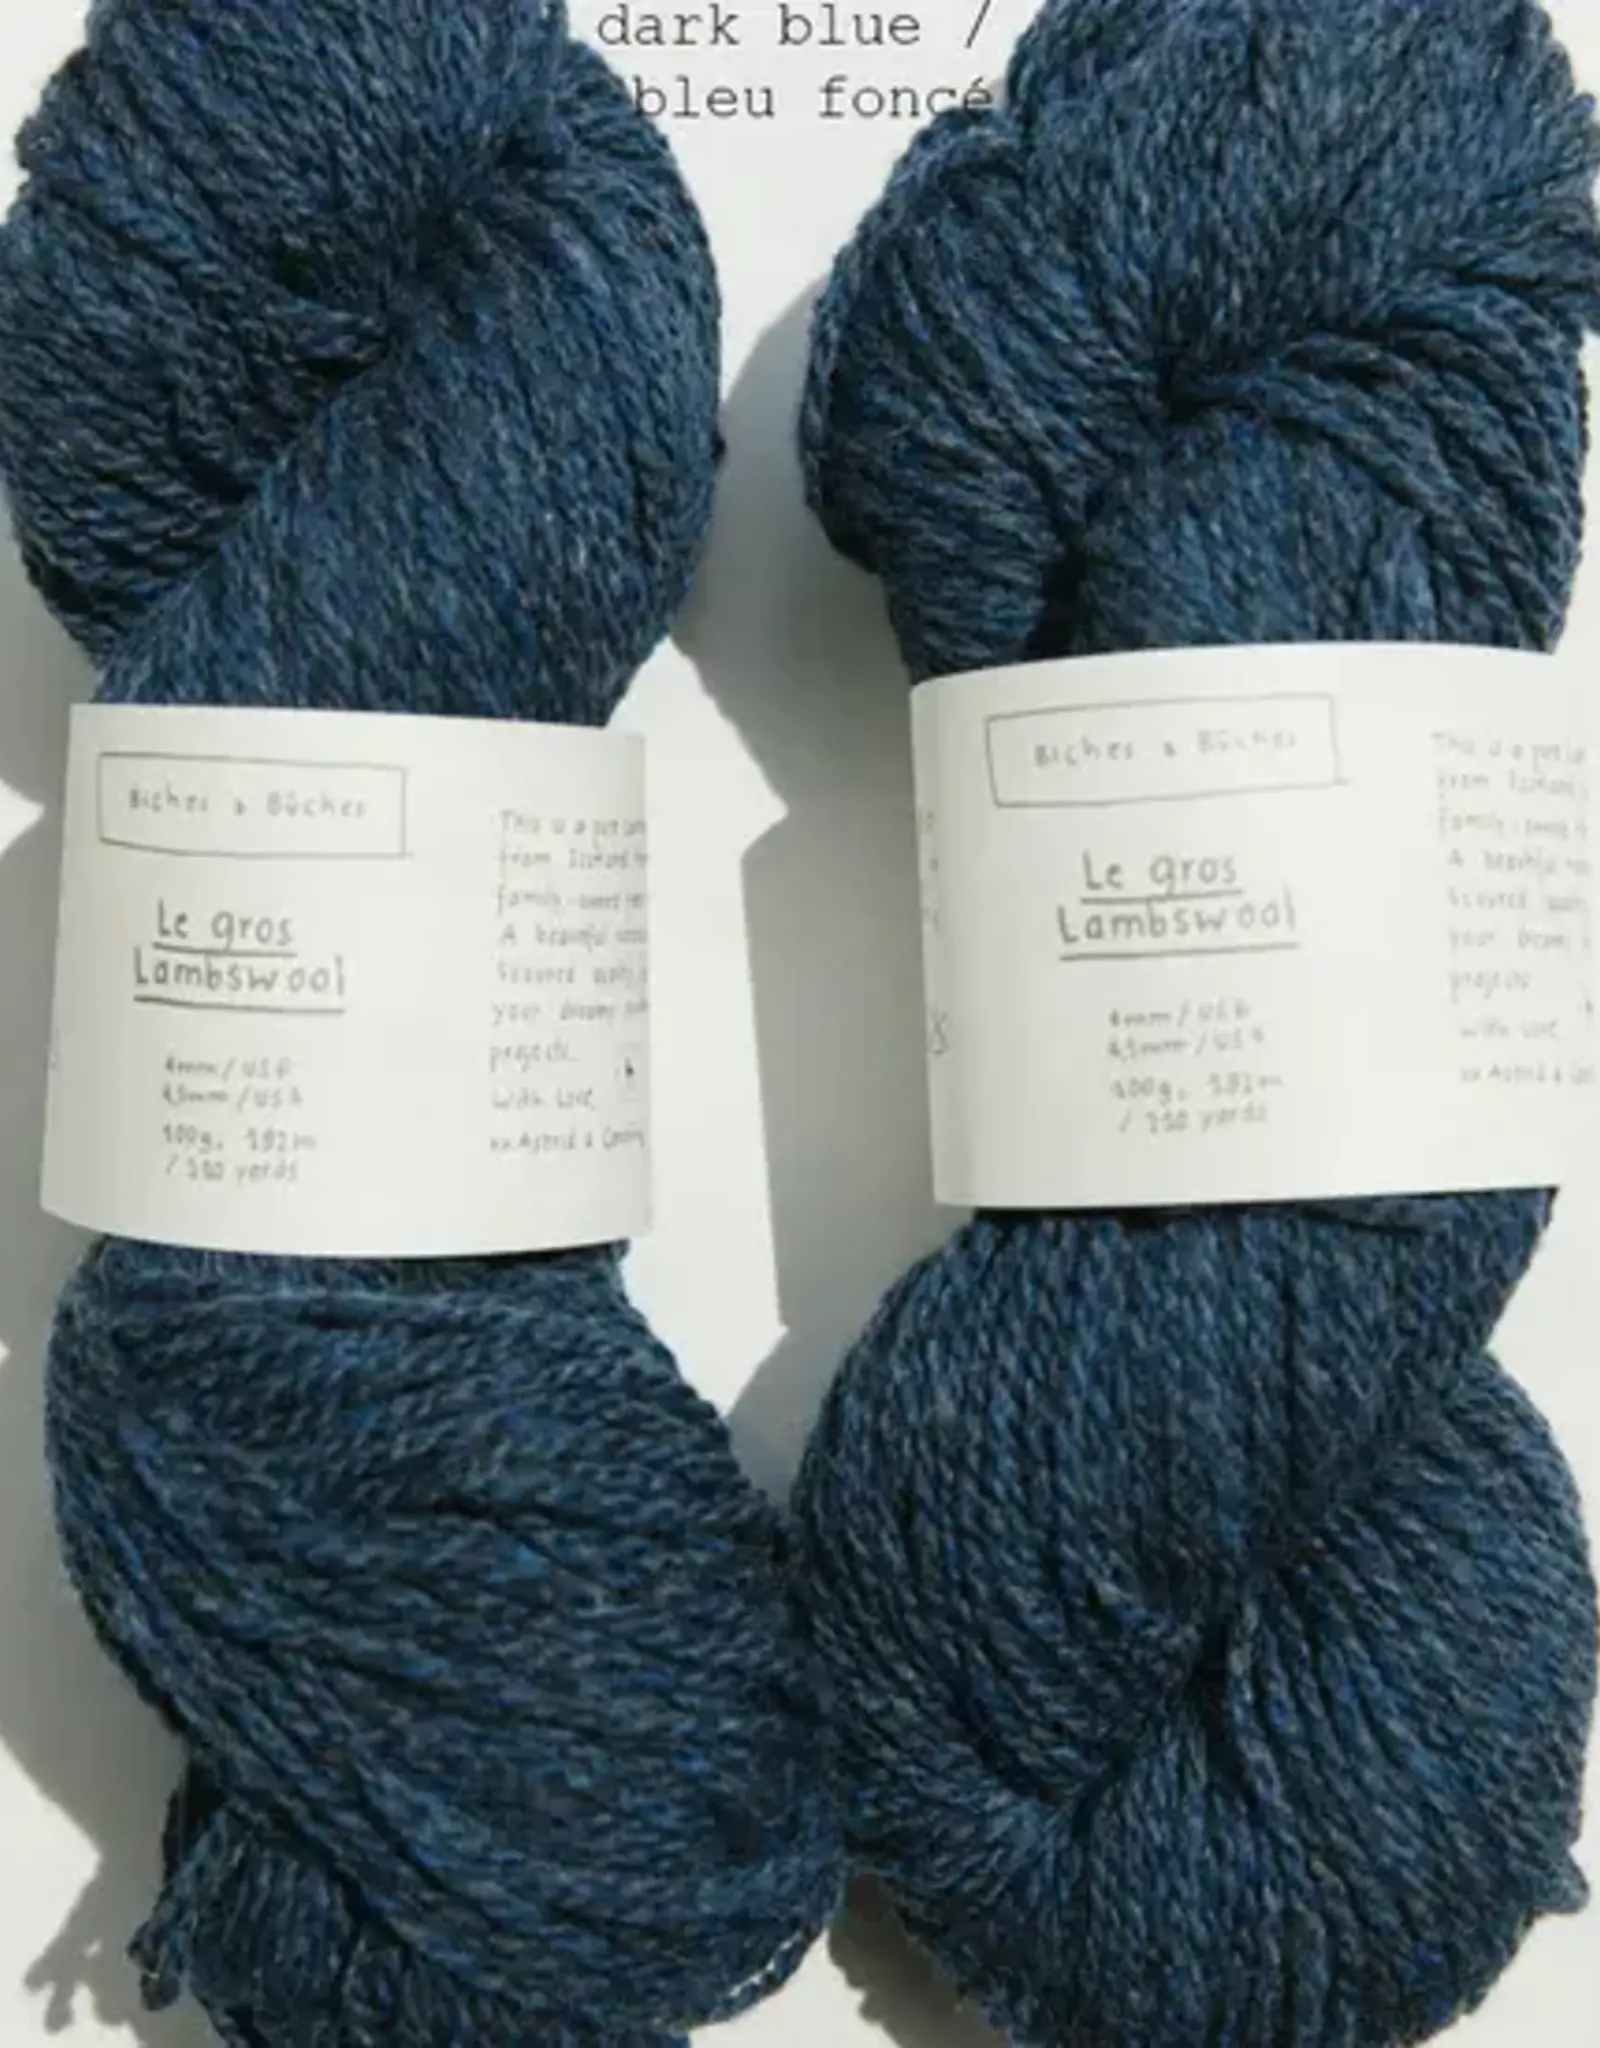 Biches & Buches Le Gros Lambswool dark blue